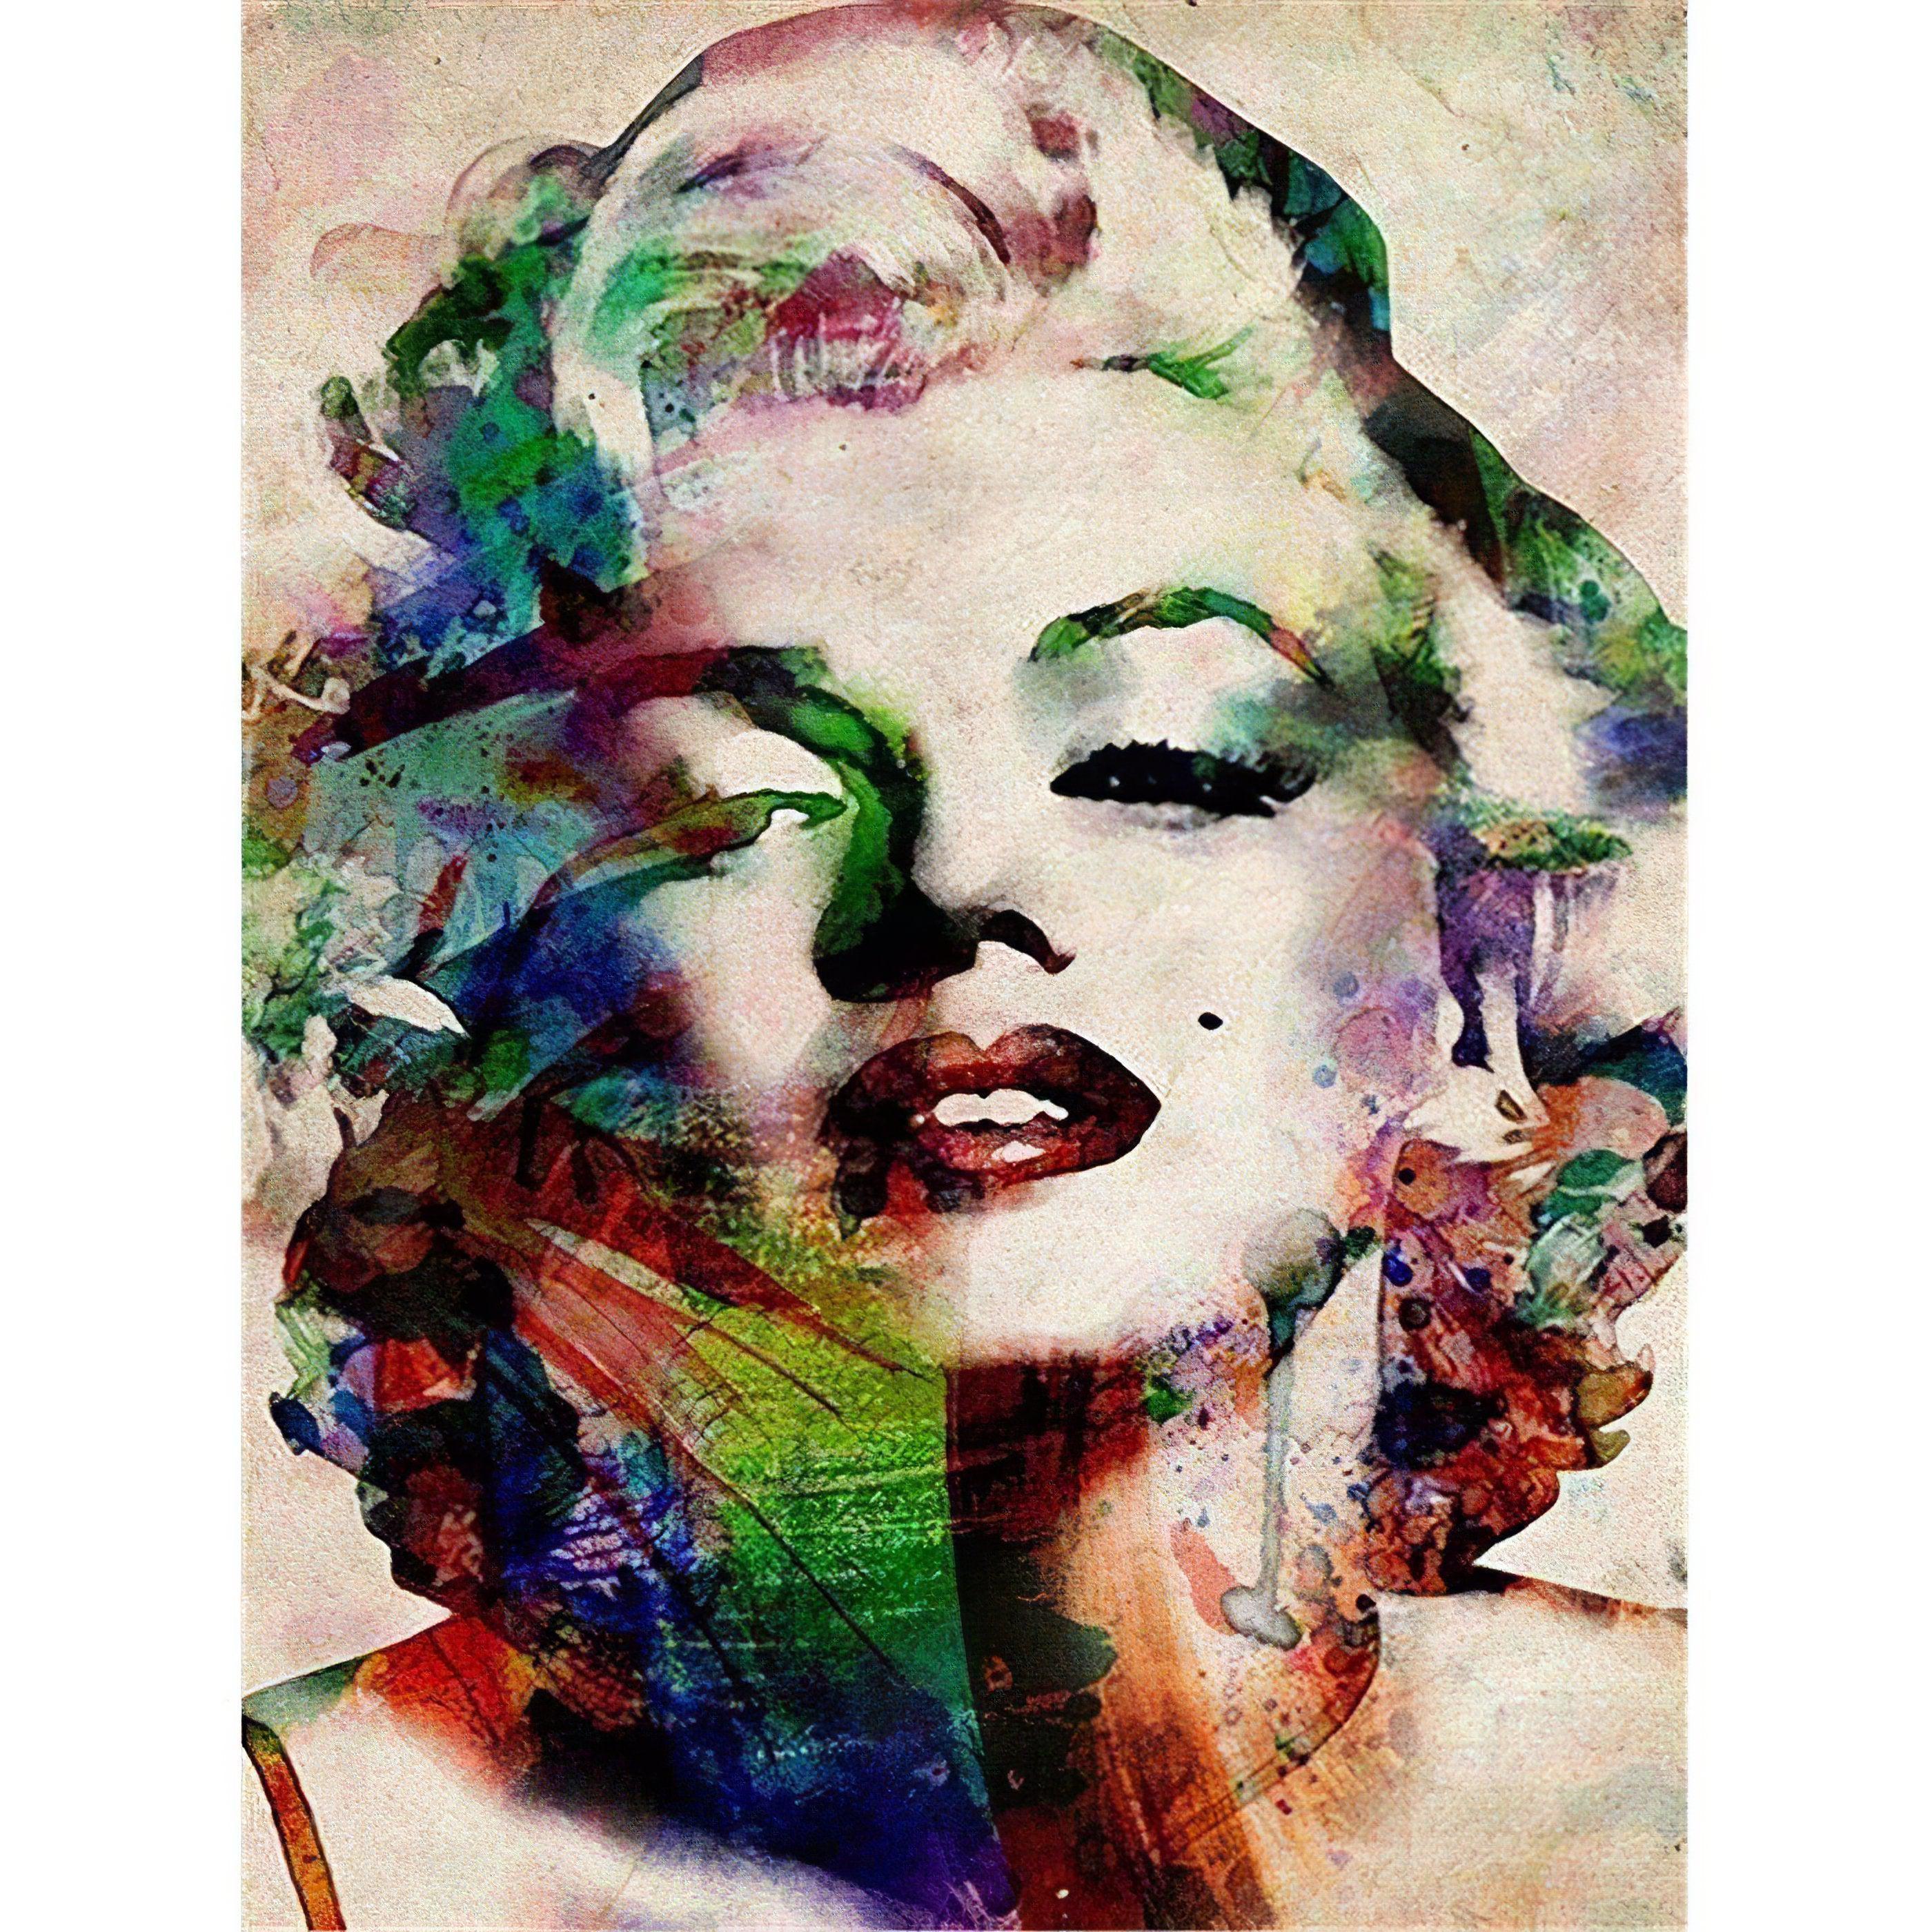 The Wonderful Face Of Marilyn Monroe